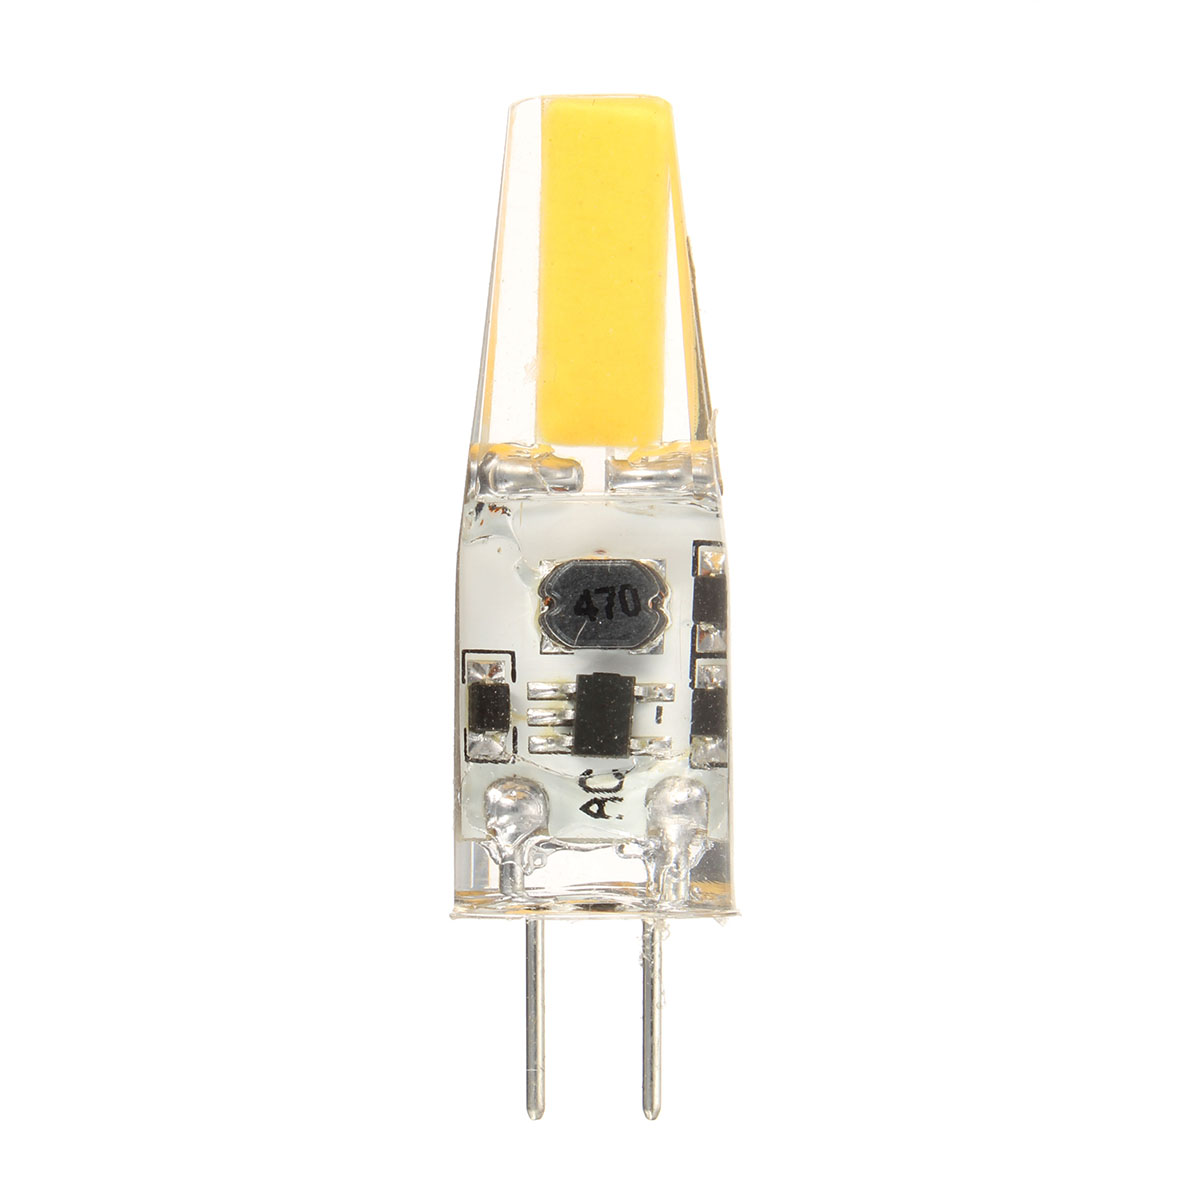 4PCS-G4-2W-Warm-White-COB-LED-Bulb-for-Chandelier-Light-Replace-Halogen-Lamp-DCAC12V-1454470-2